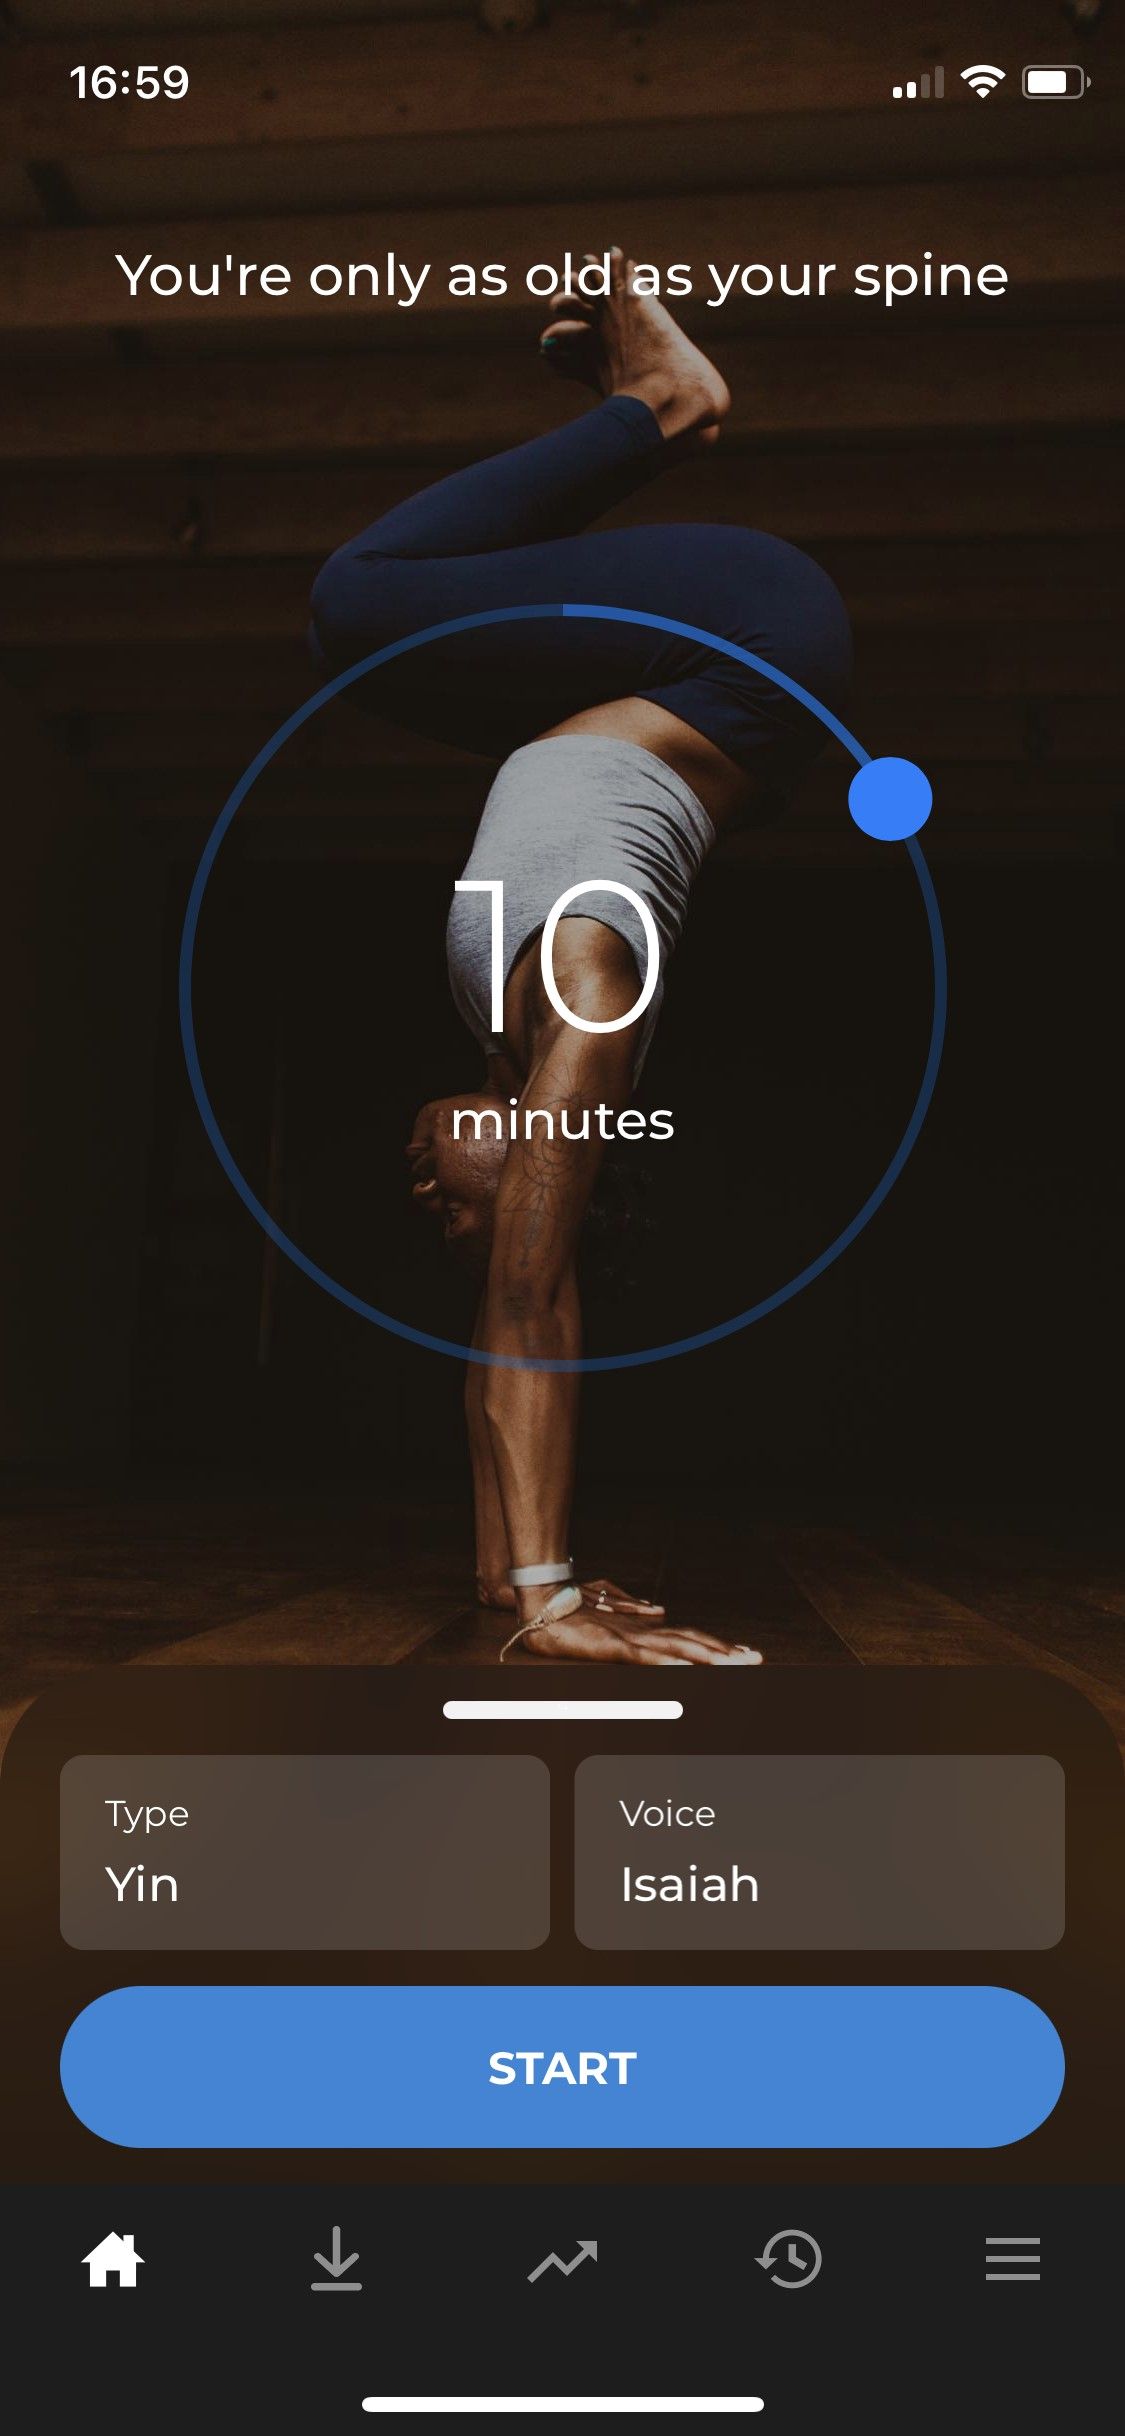 Downdog yoga app - suitable for short yoga practise